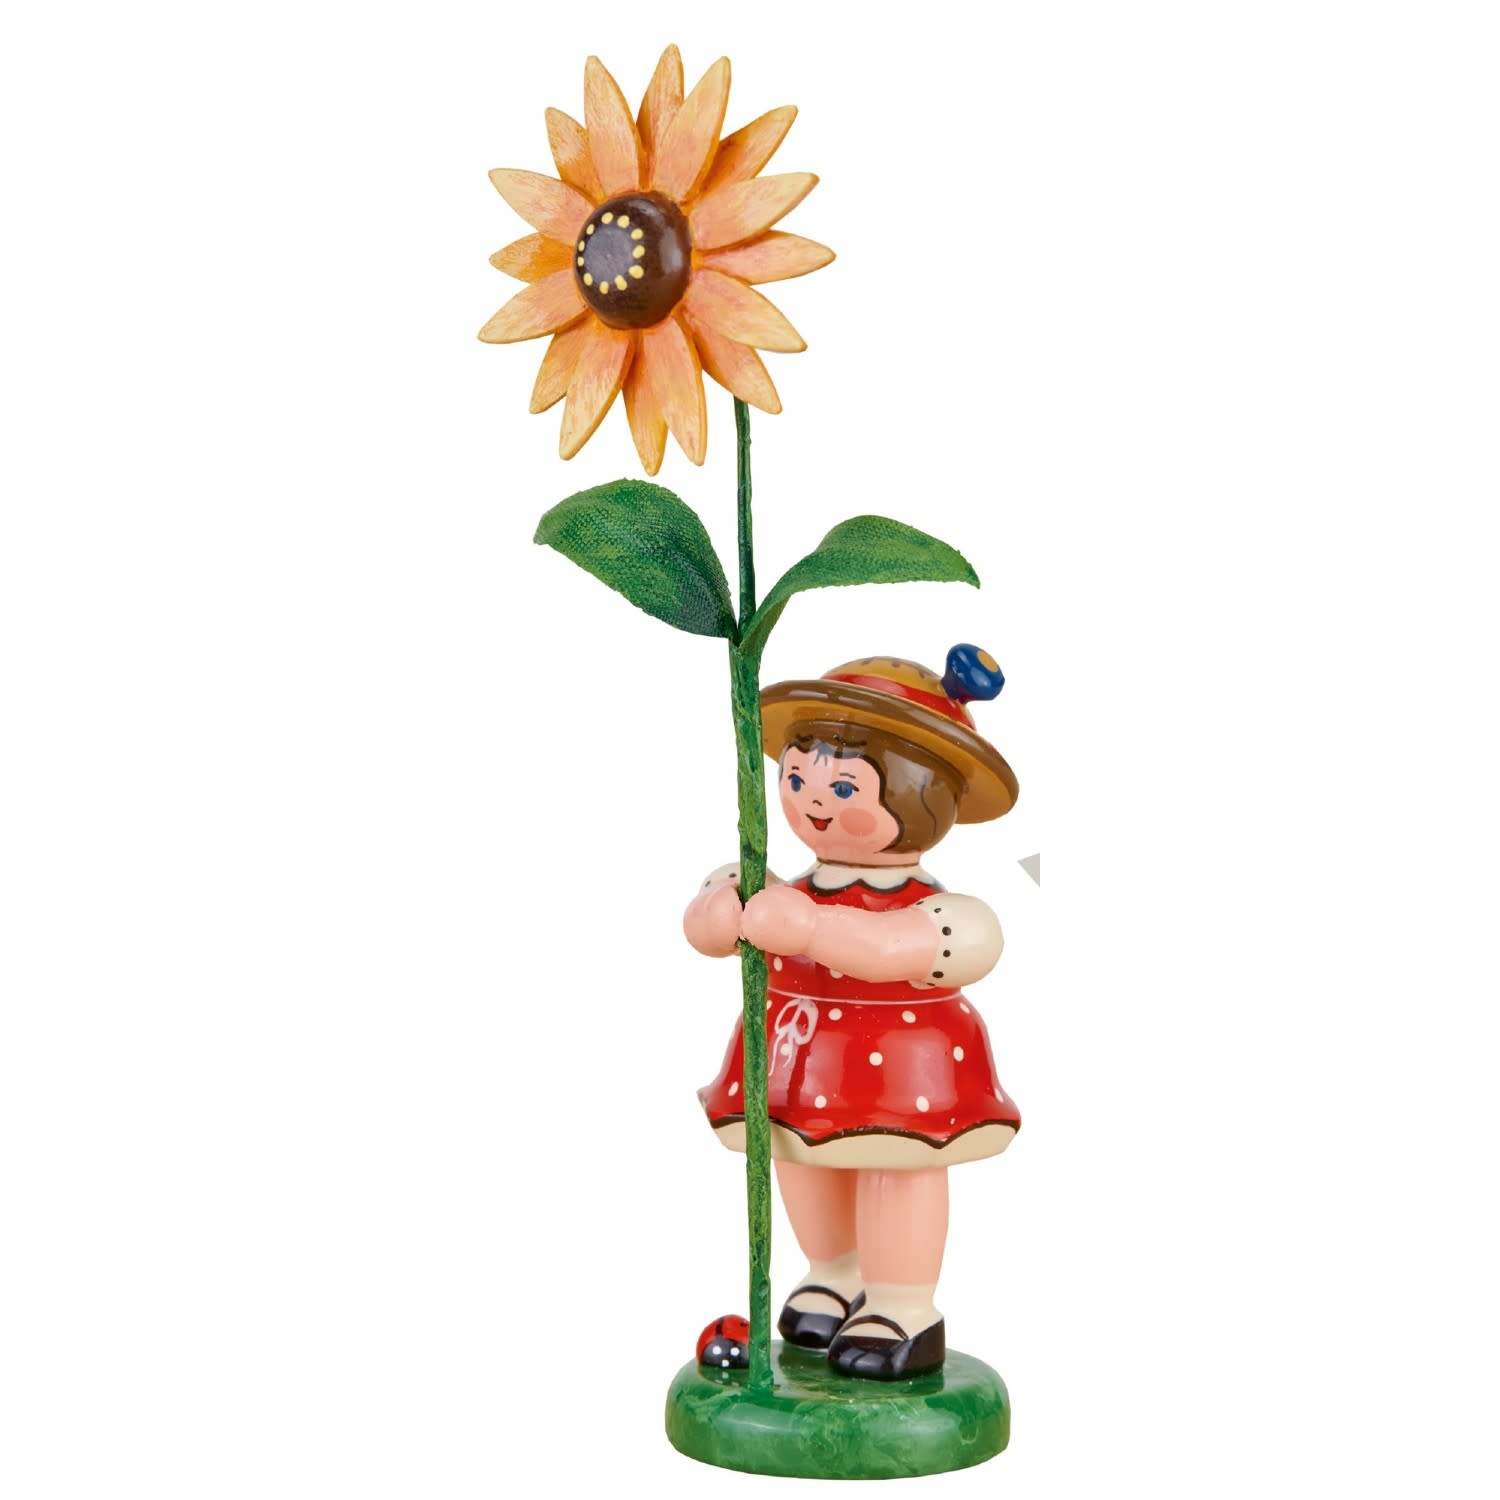 Hubrig 307h0101 Flower Children-Girl with Sun Hat  4.3 inches